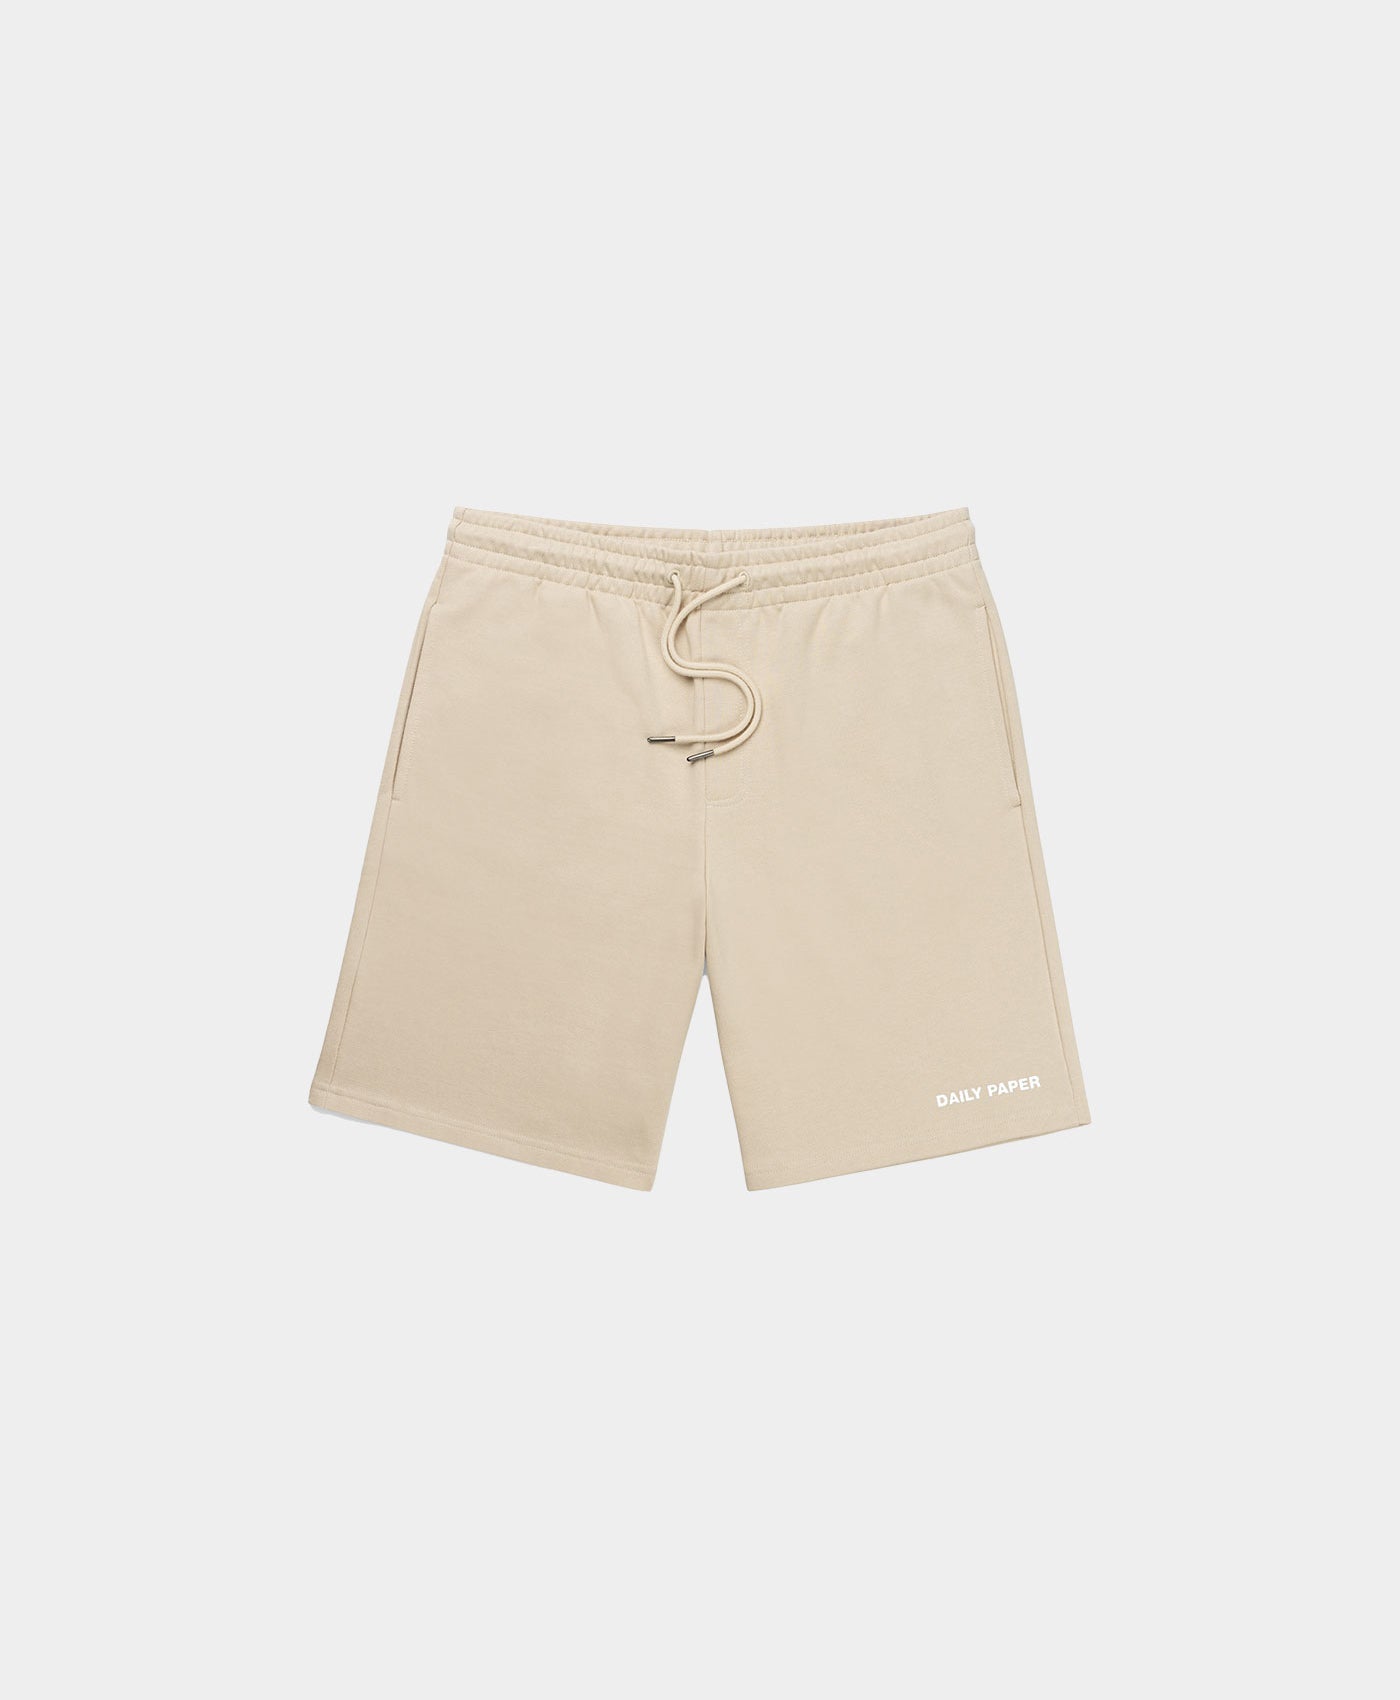 DP - Beige Refarid Shorts - Packshot - Front